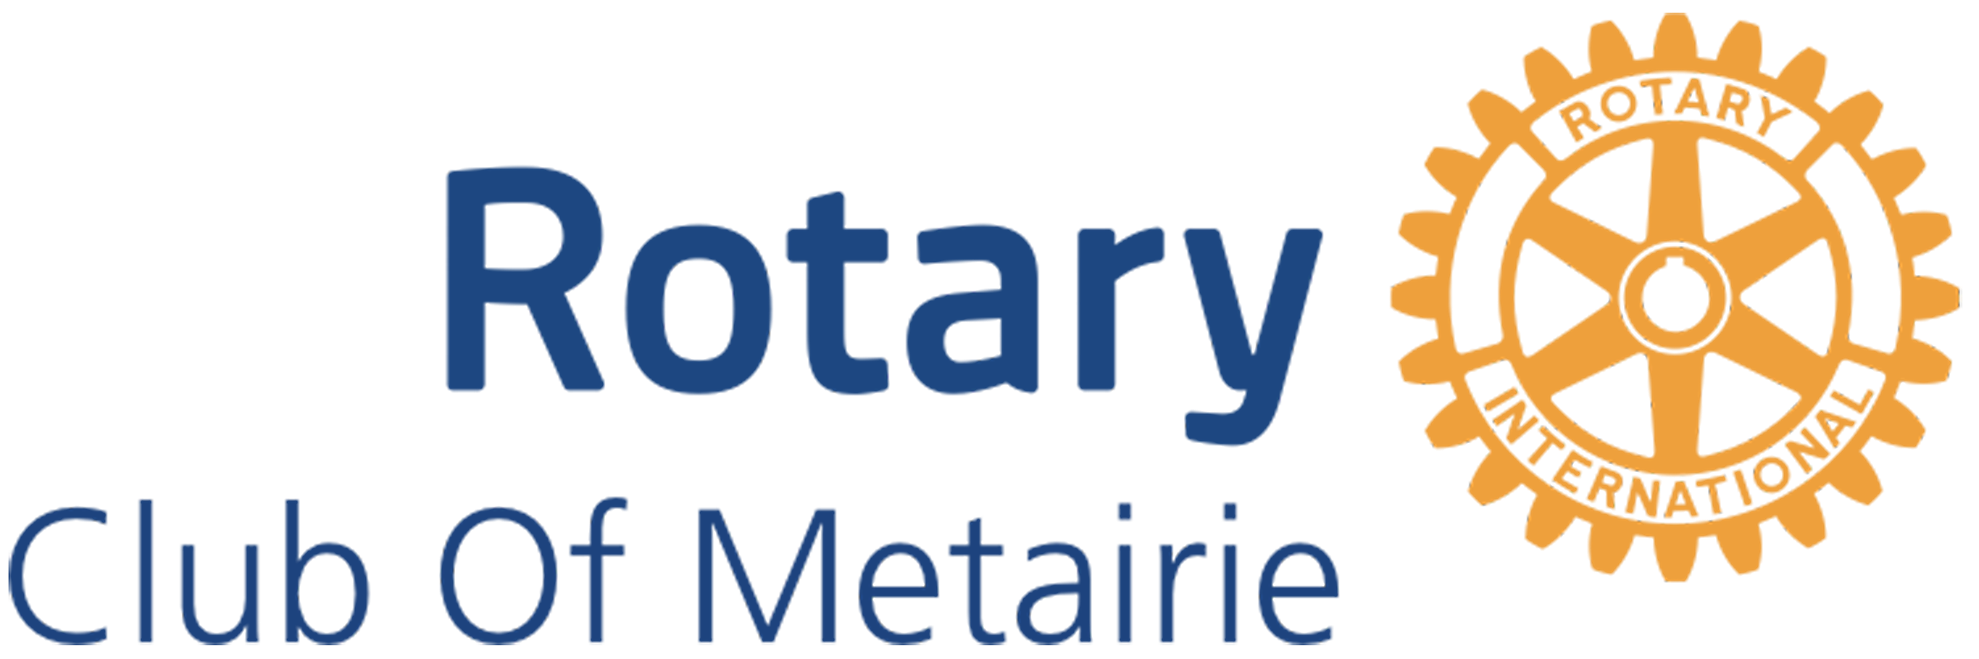 Metairie logo